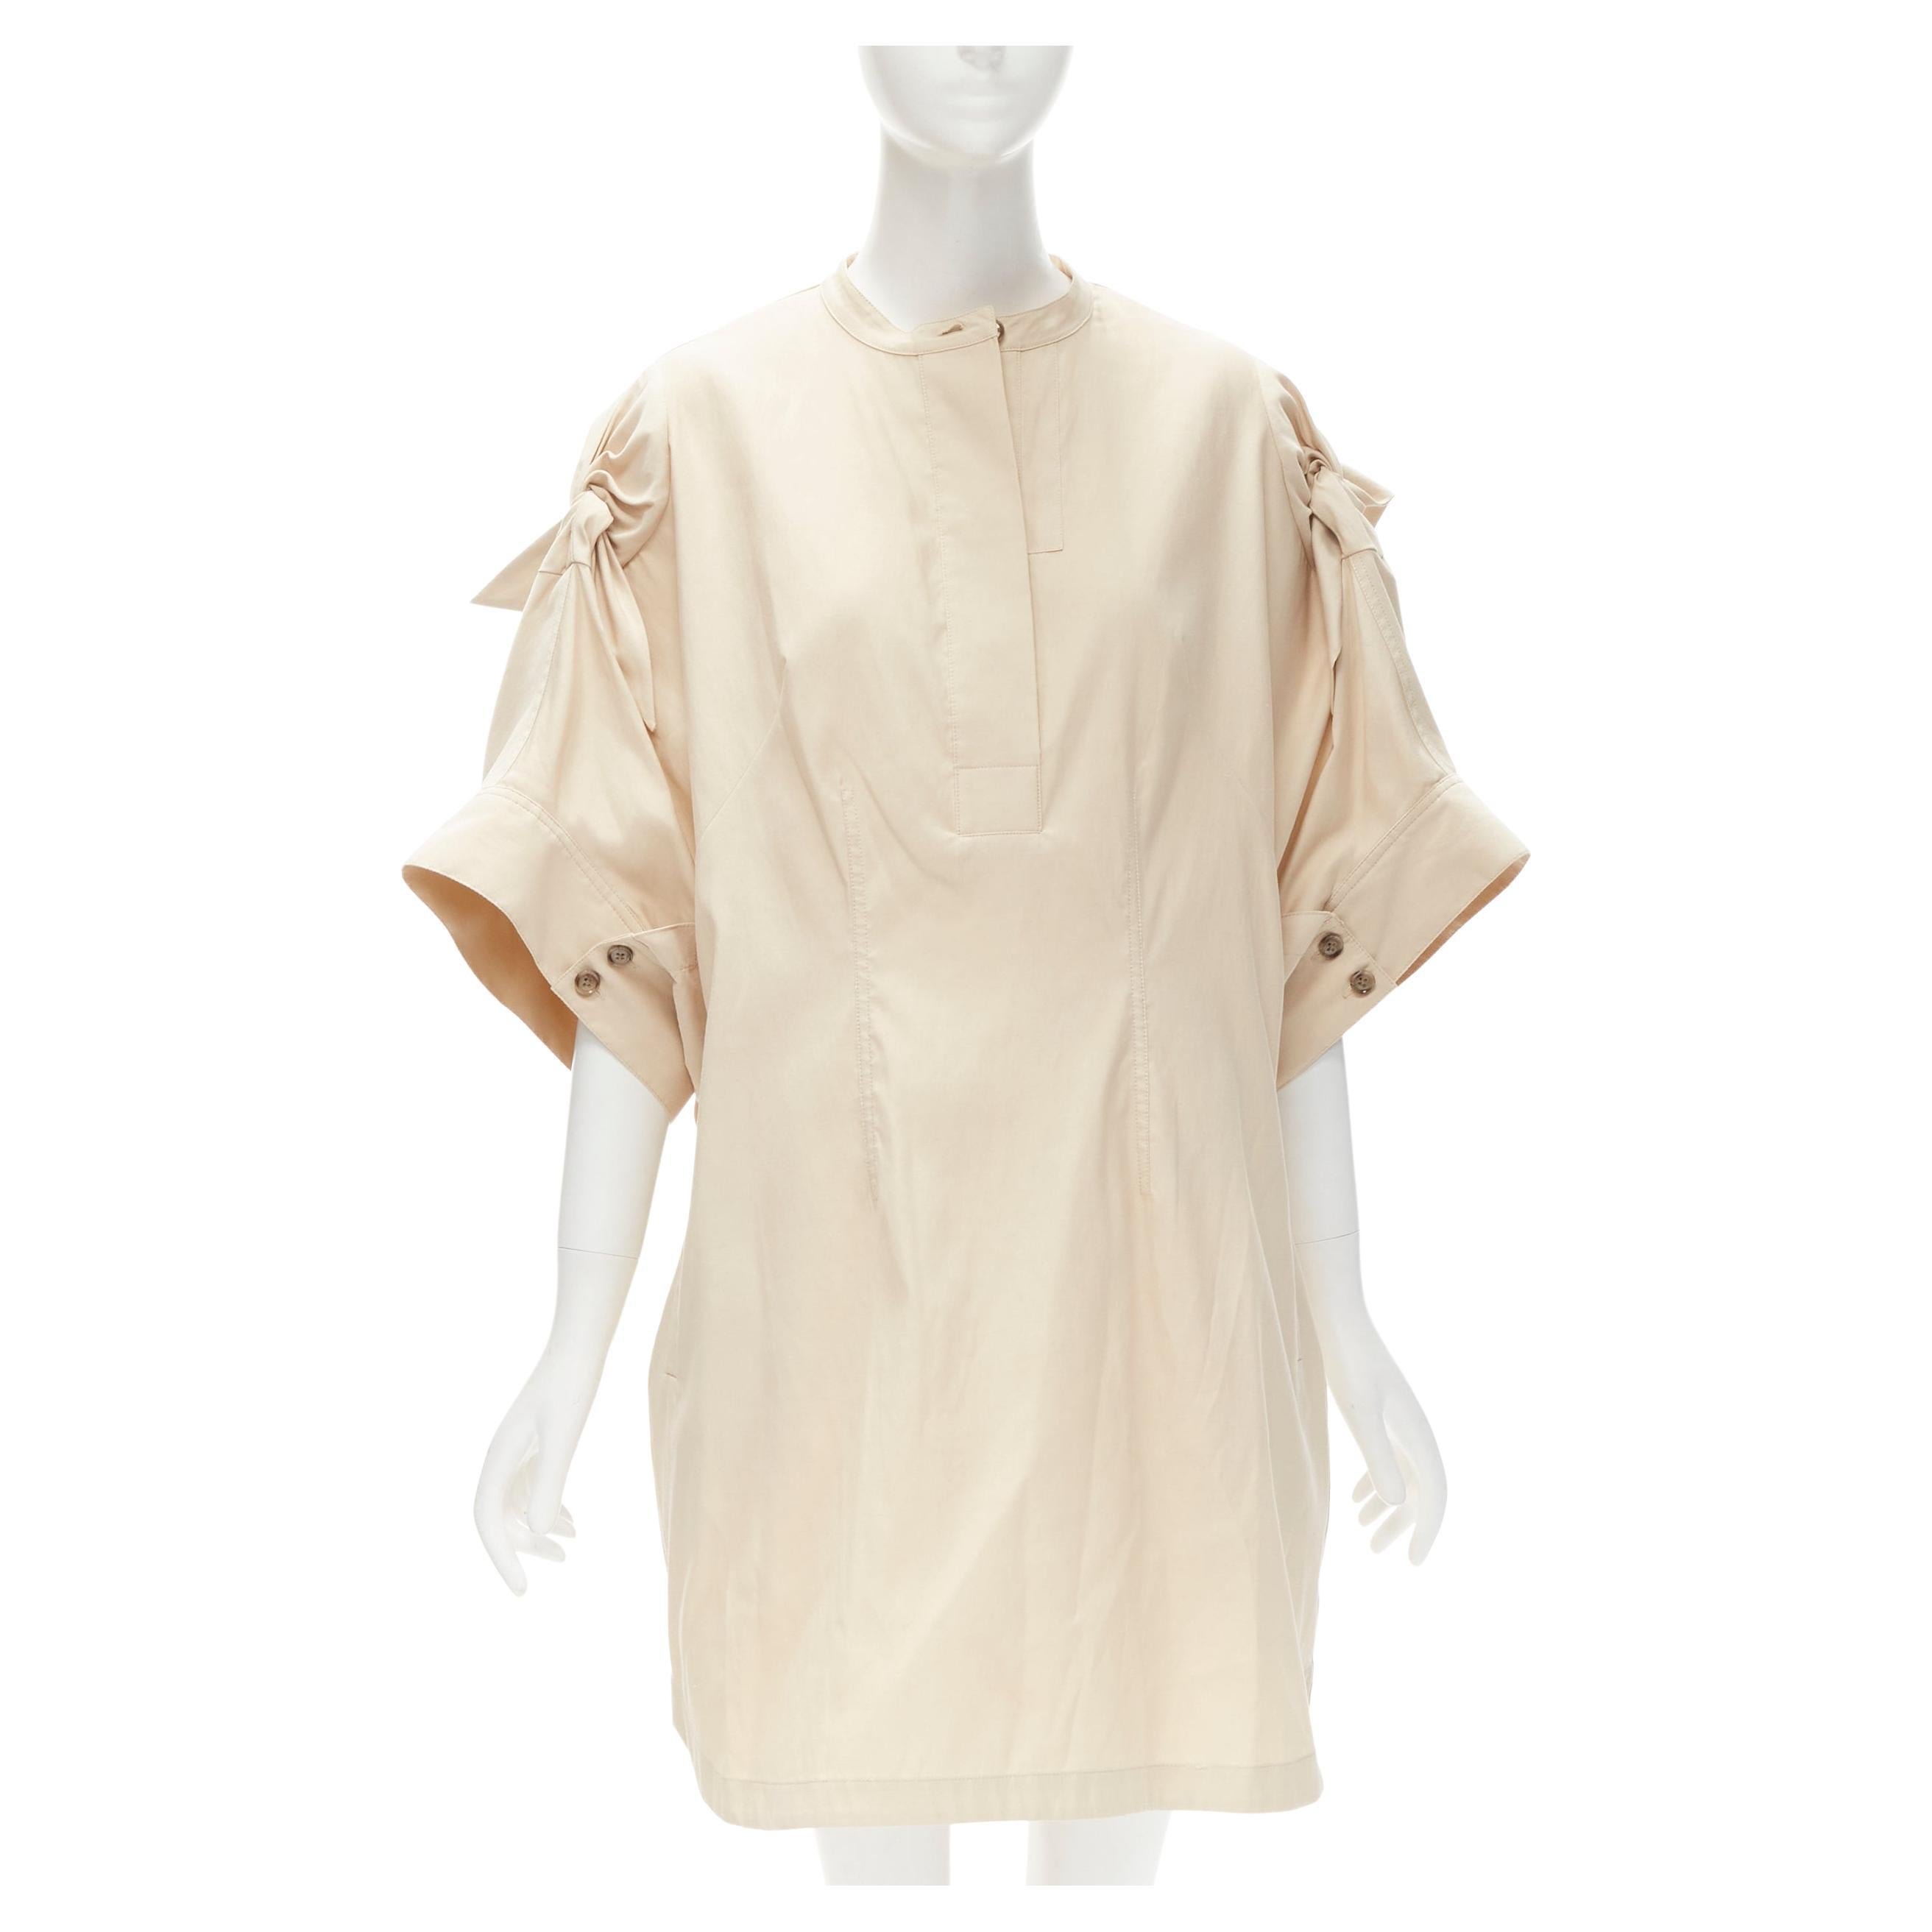 3.1 PHILLIP LIM beige cotton blend knot tie oversized cocoon dress US2 S For Sale